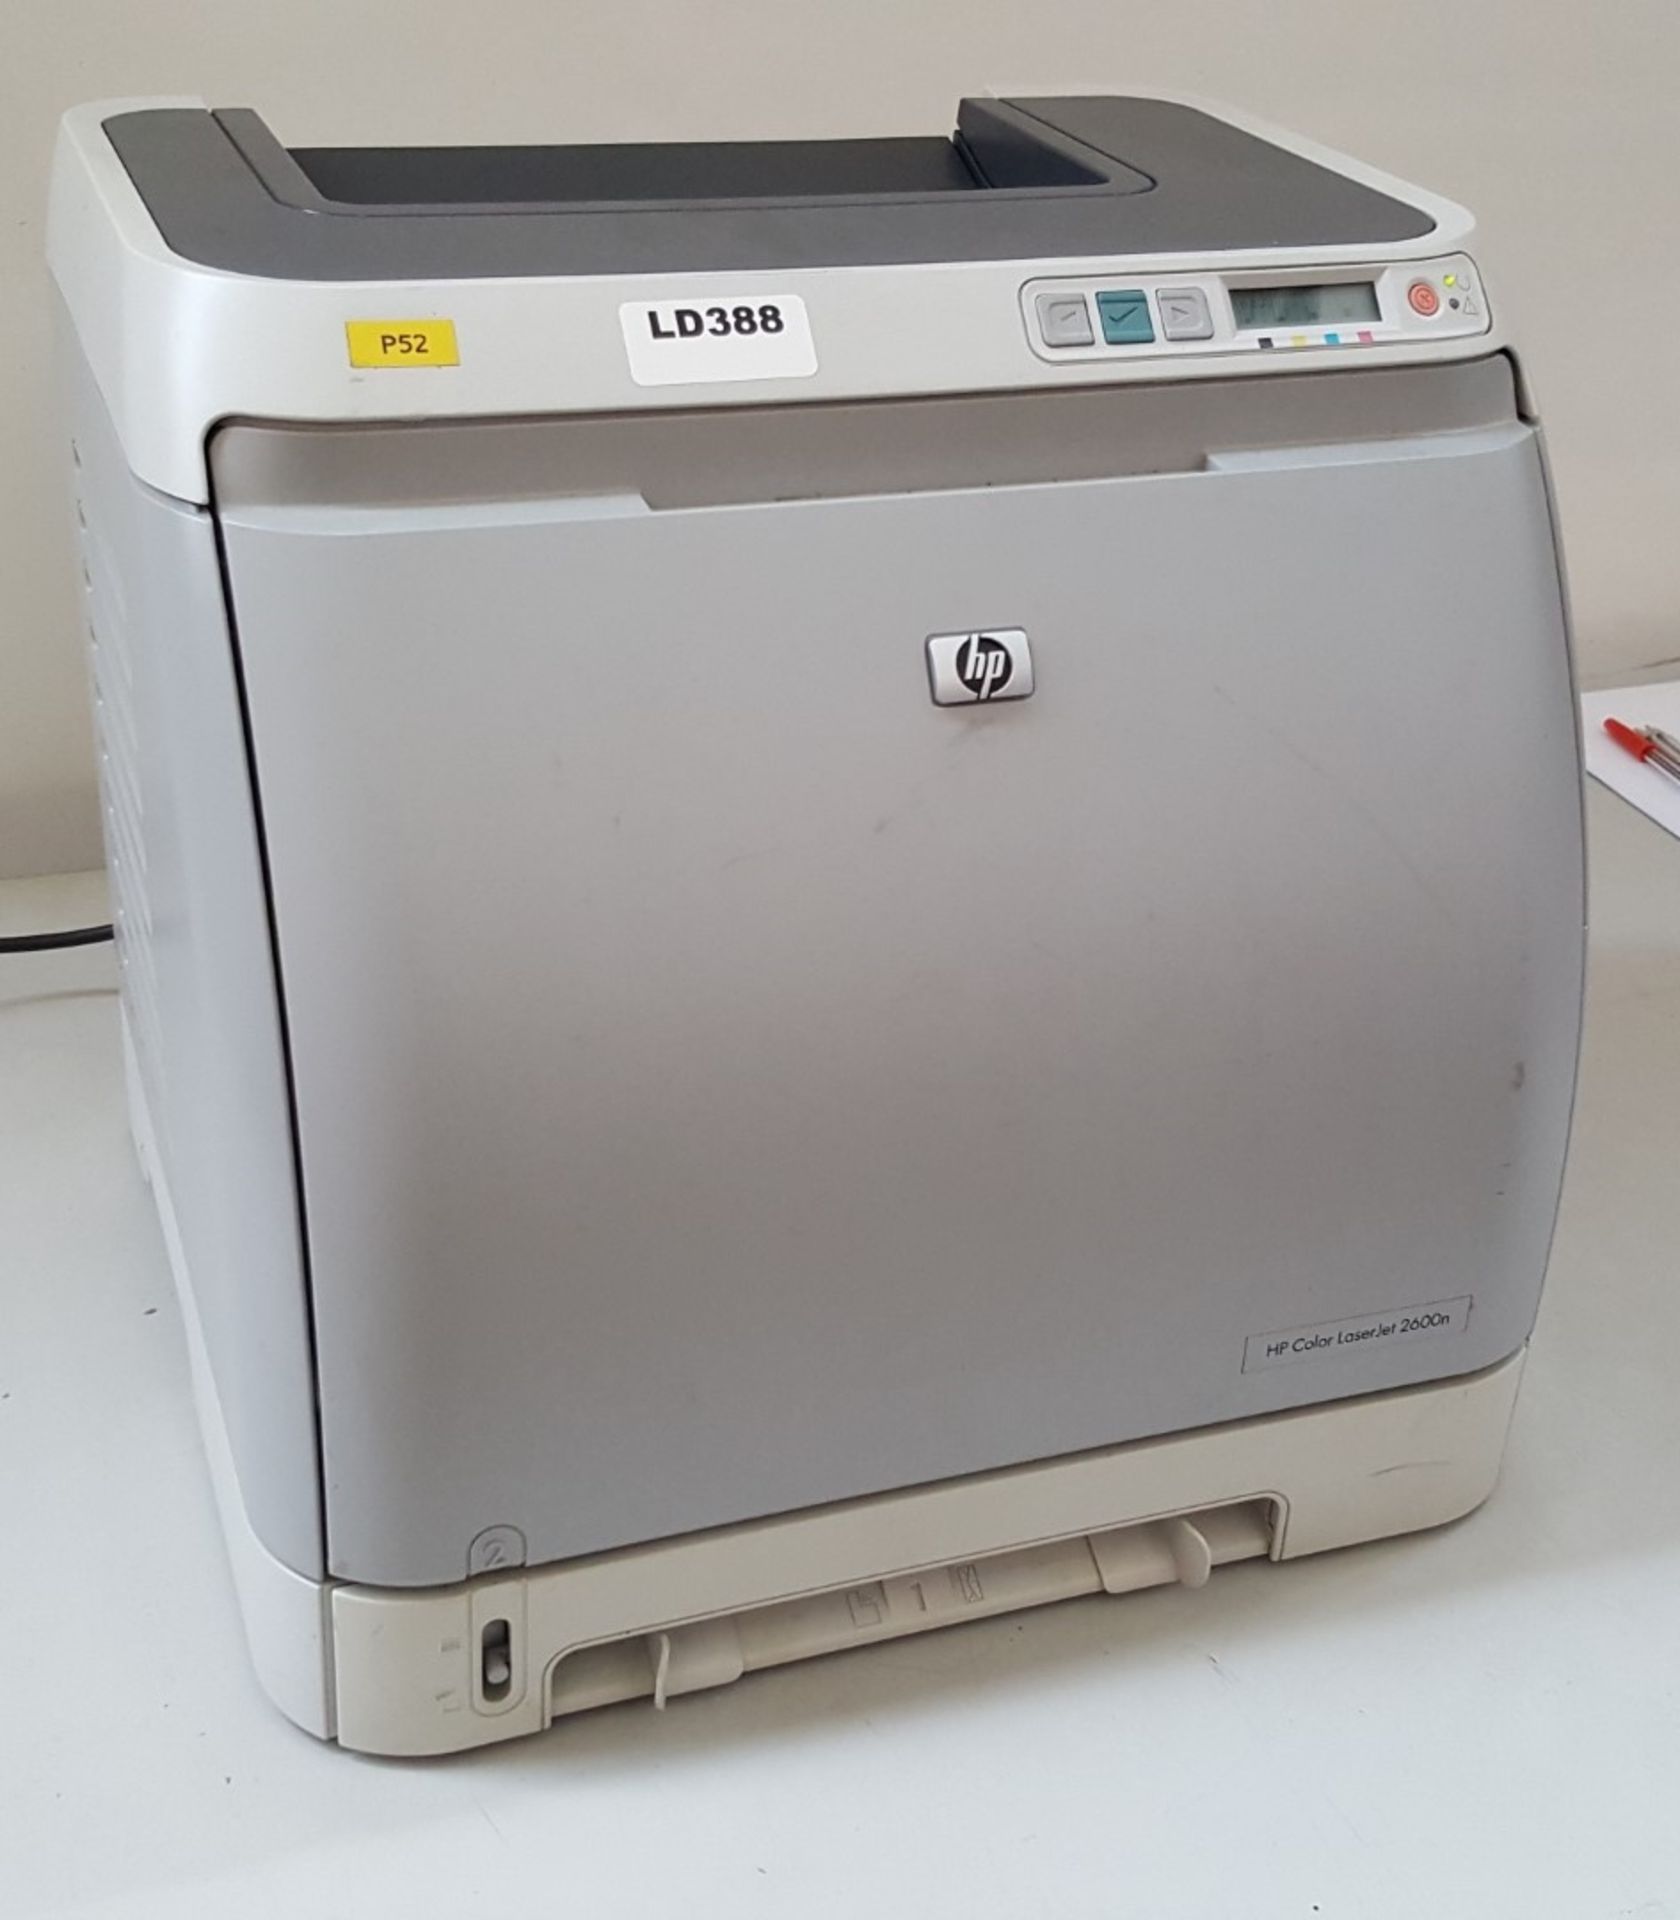 1 x HP Laserjet 2600N Printer Q6455A - Ref LD388